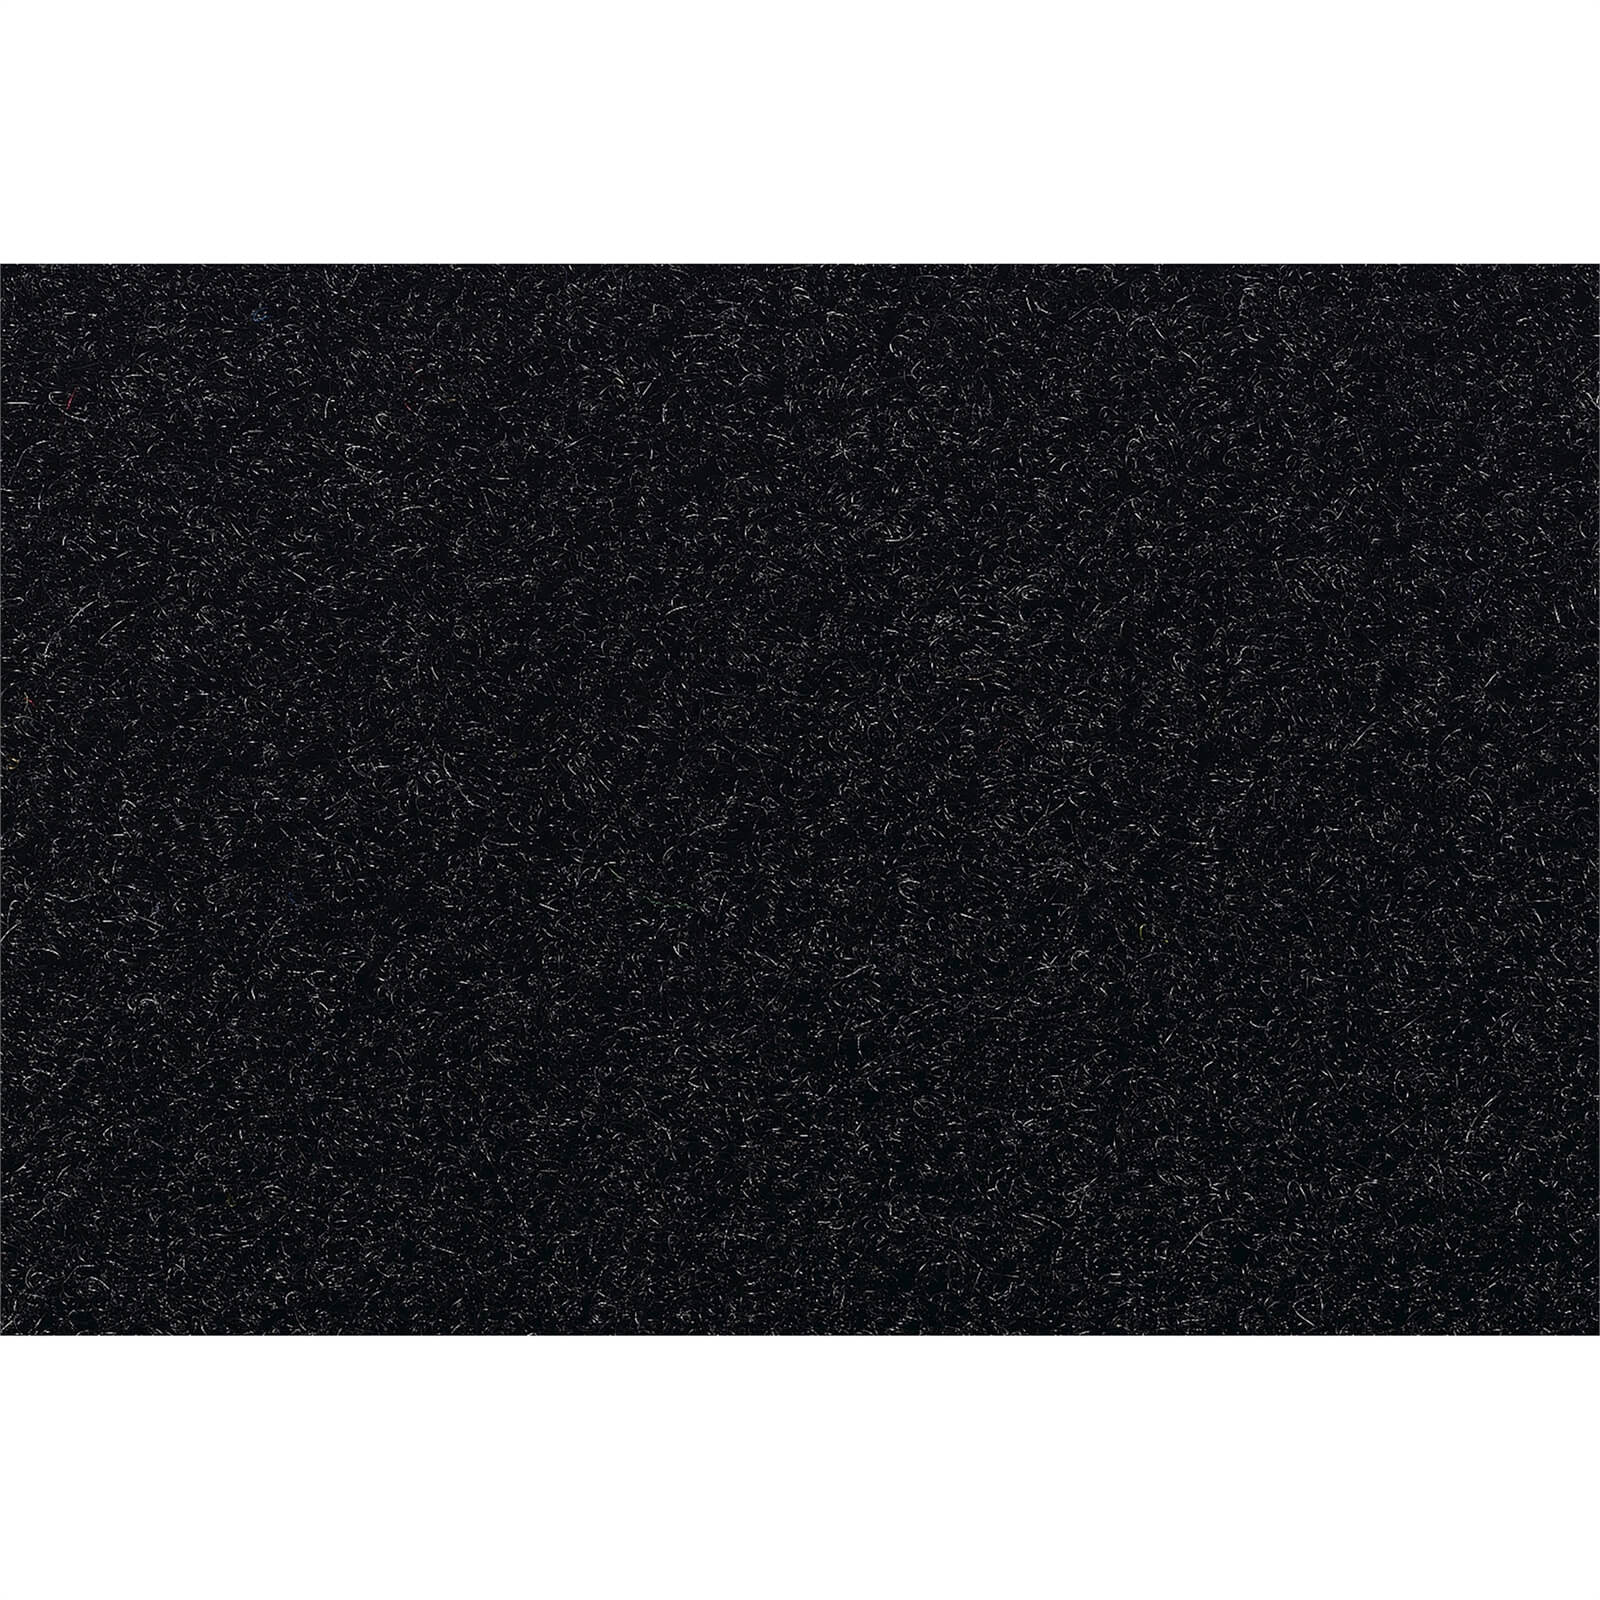 Photo of Synthetic Fine Coir Matting -black